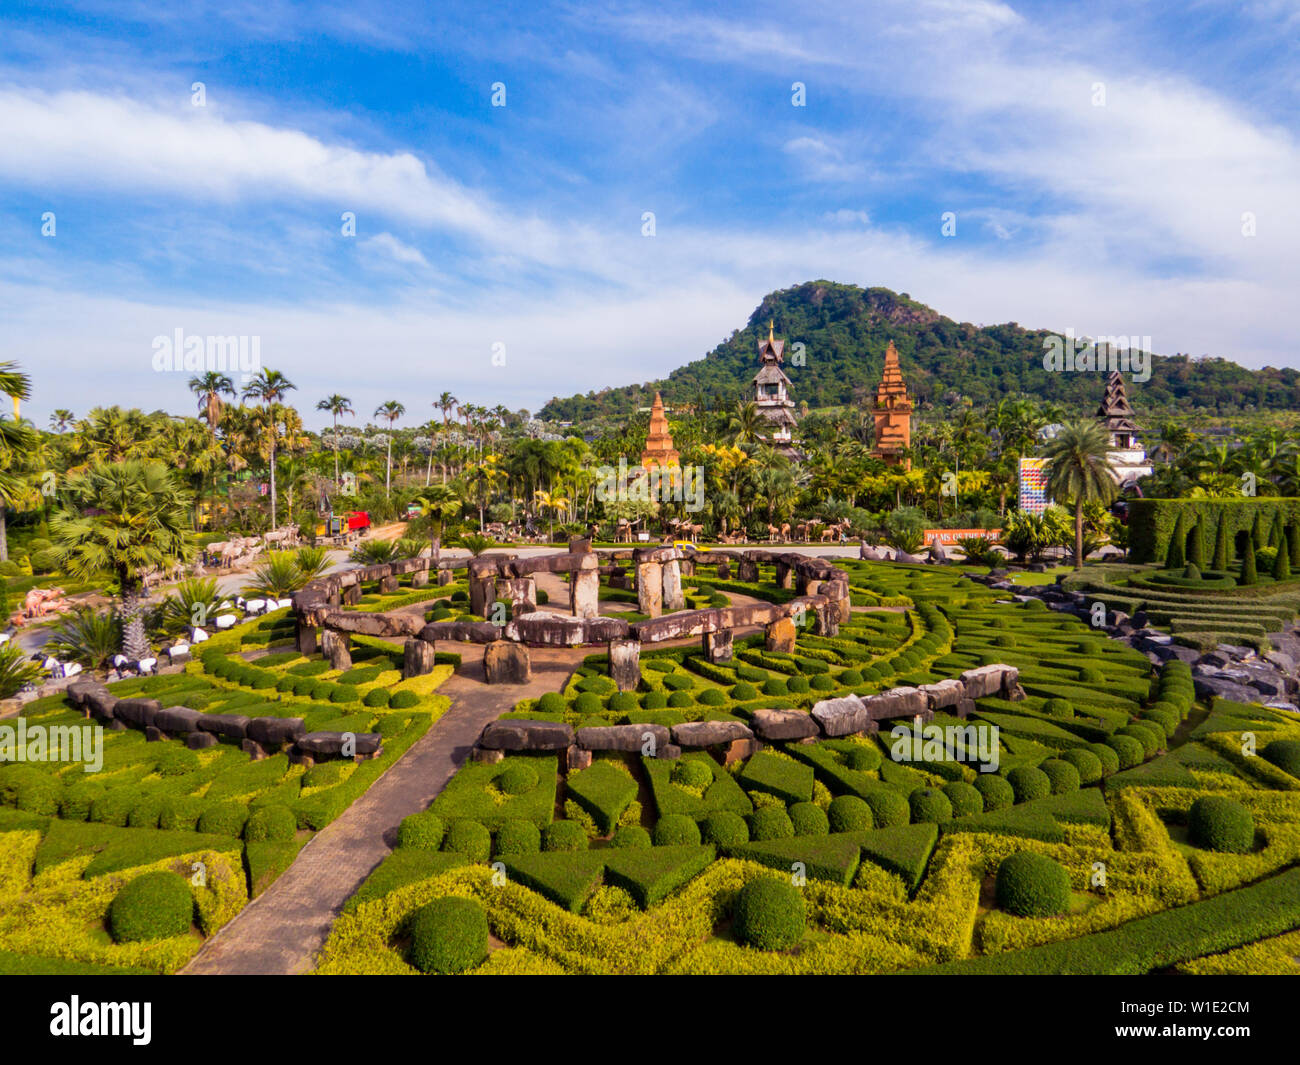 View of Nong Nooch Tropical Botanical Garden in Pattaya, Thailand Stock Photo